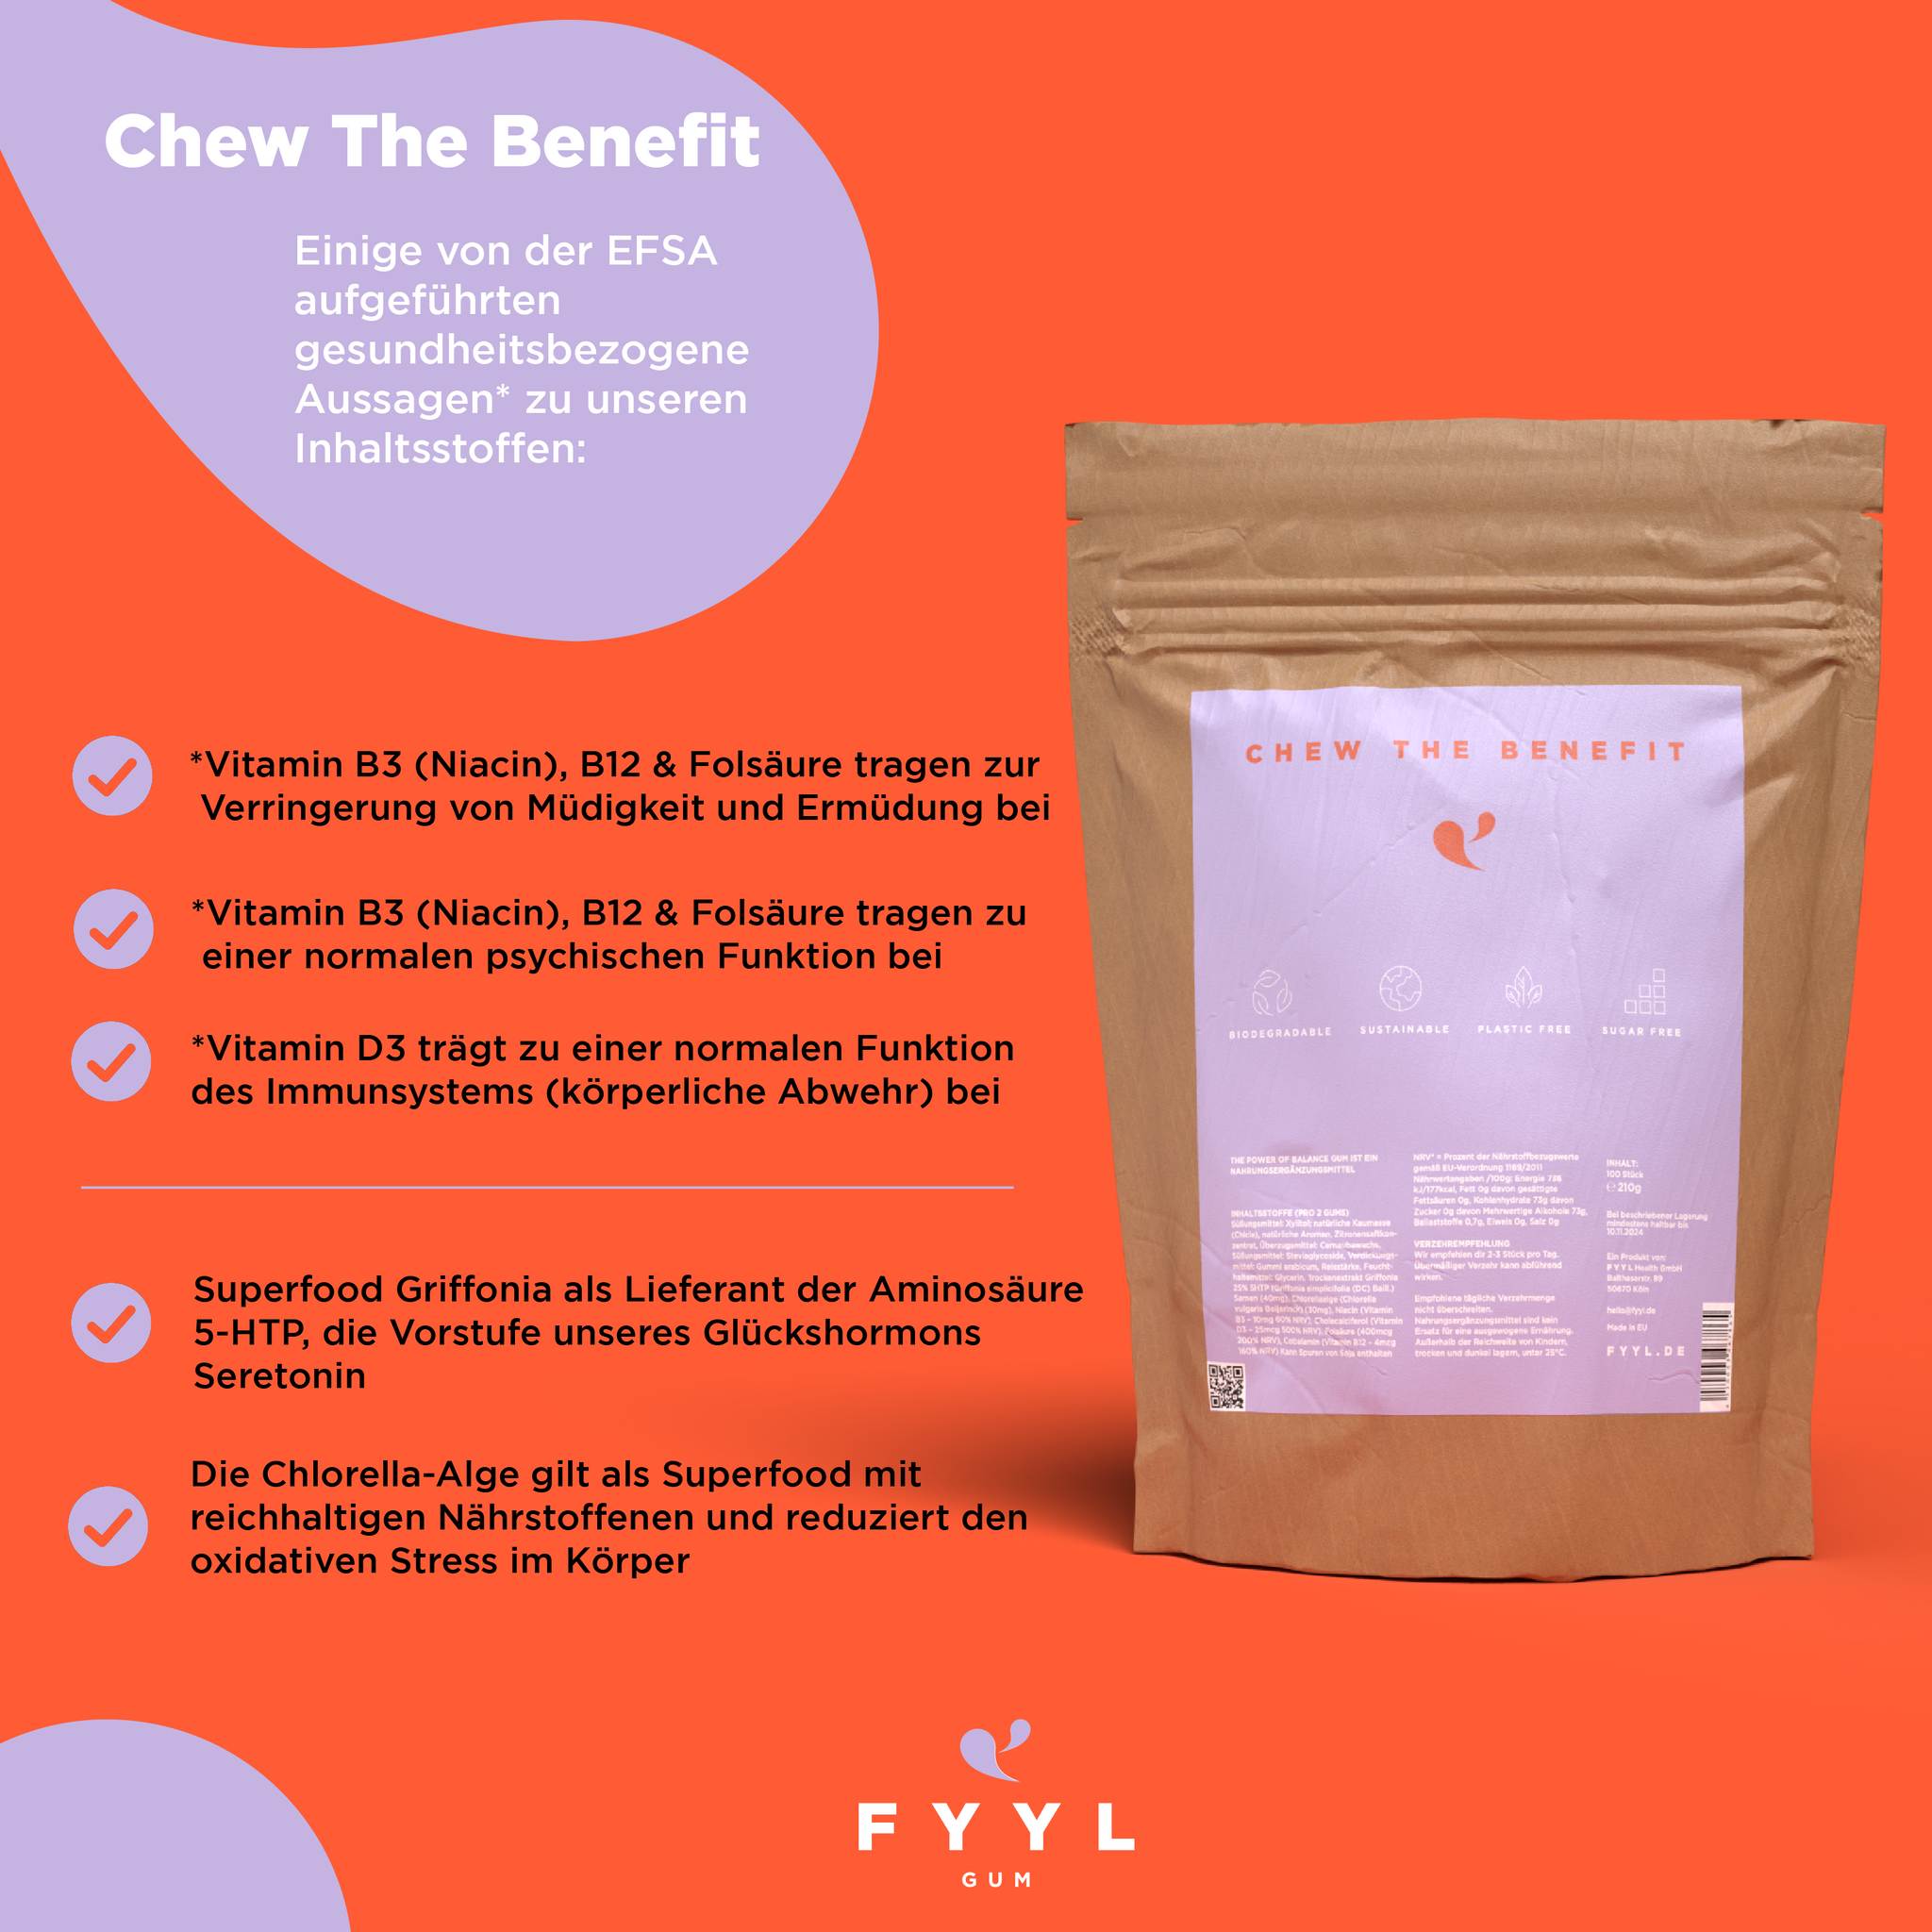 FYYL GUM | The Power of Balance | Antistress mit Chlorella-Alge, Griffonia, und Vitamin B-Komplex